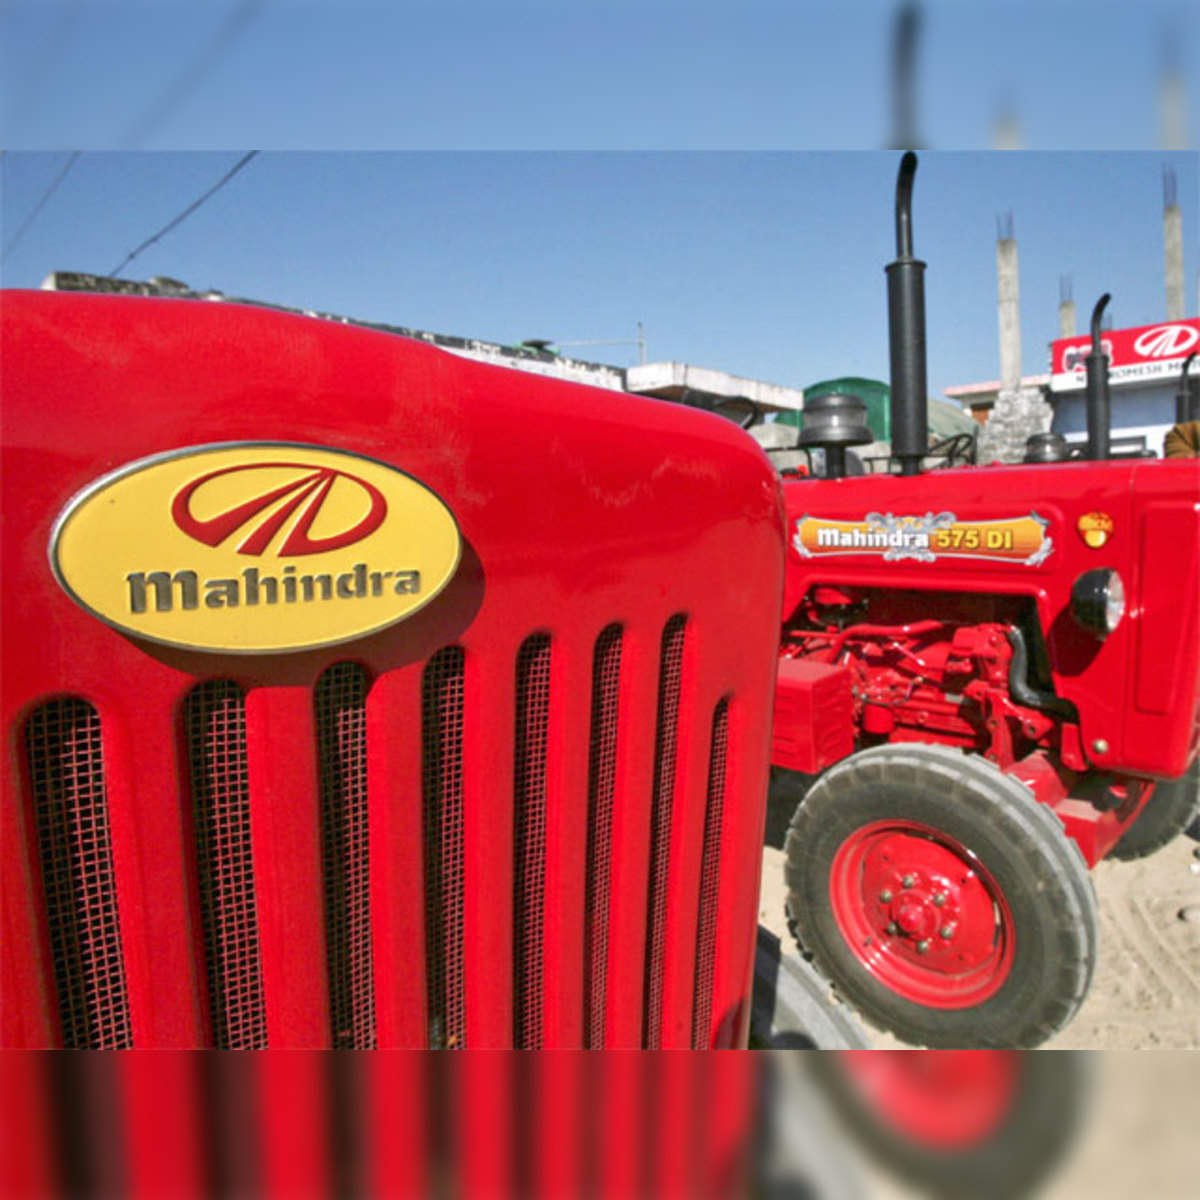 mahindra tractor logo hd